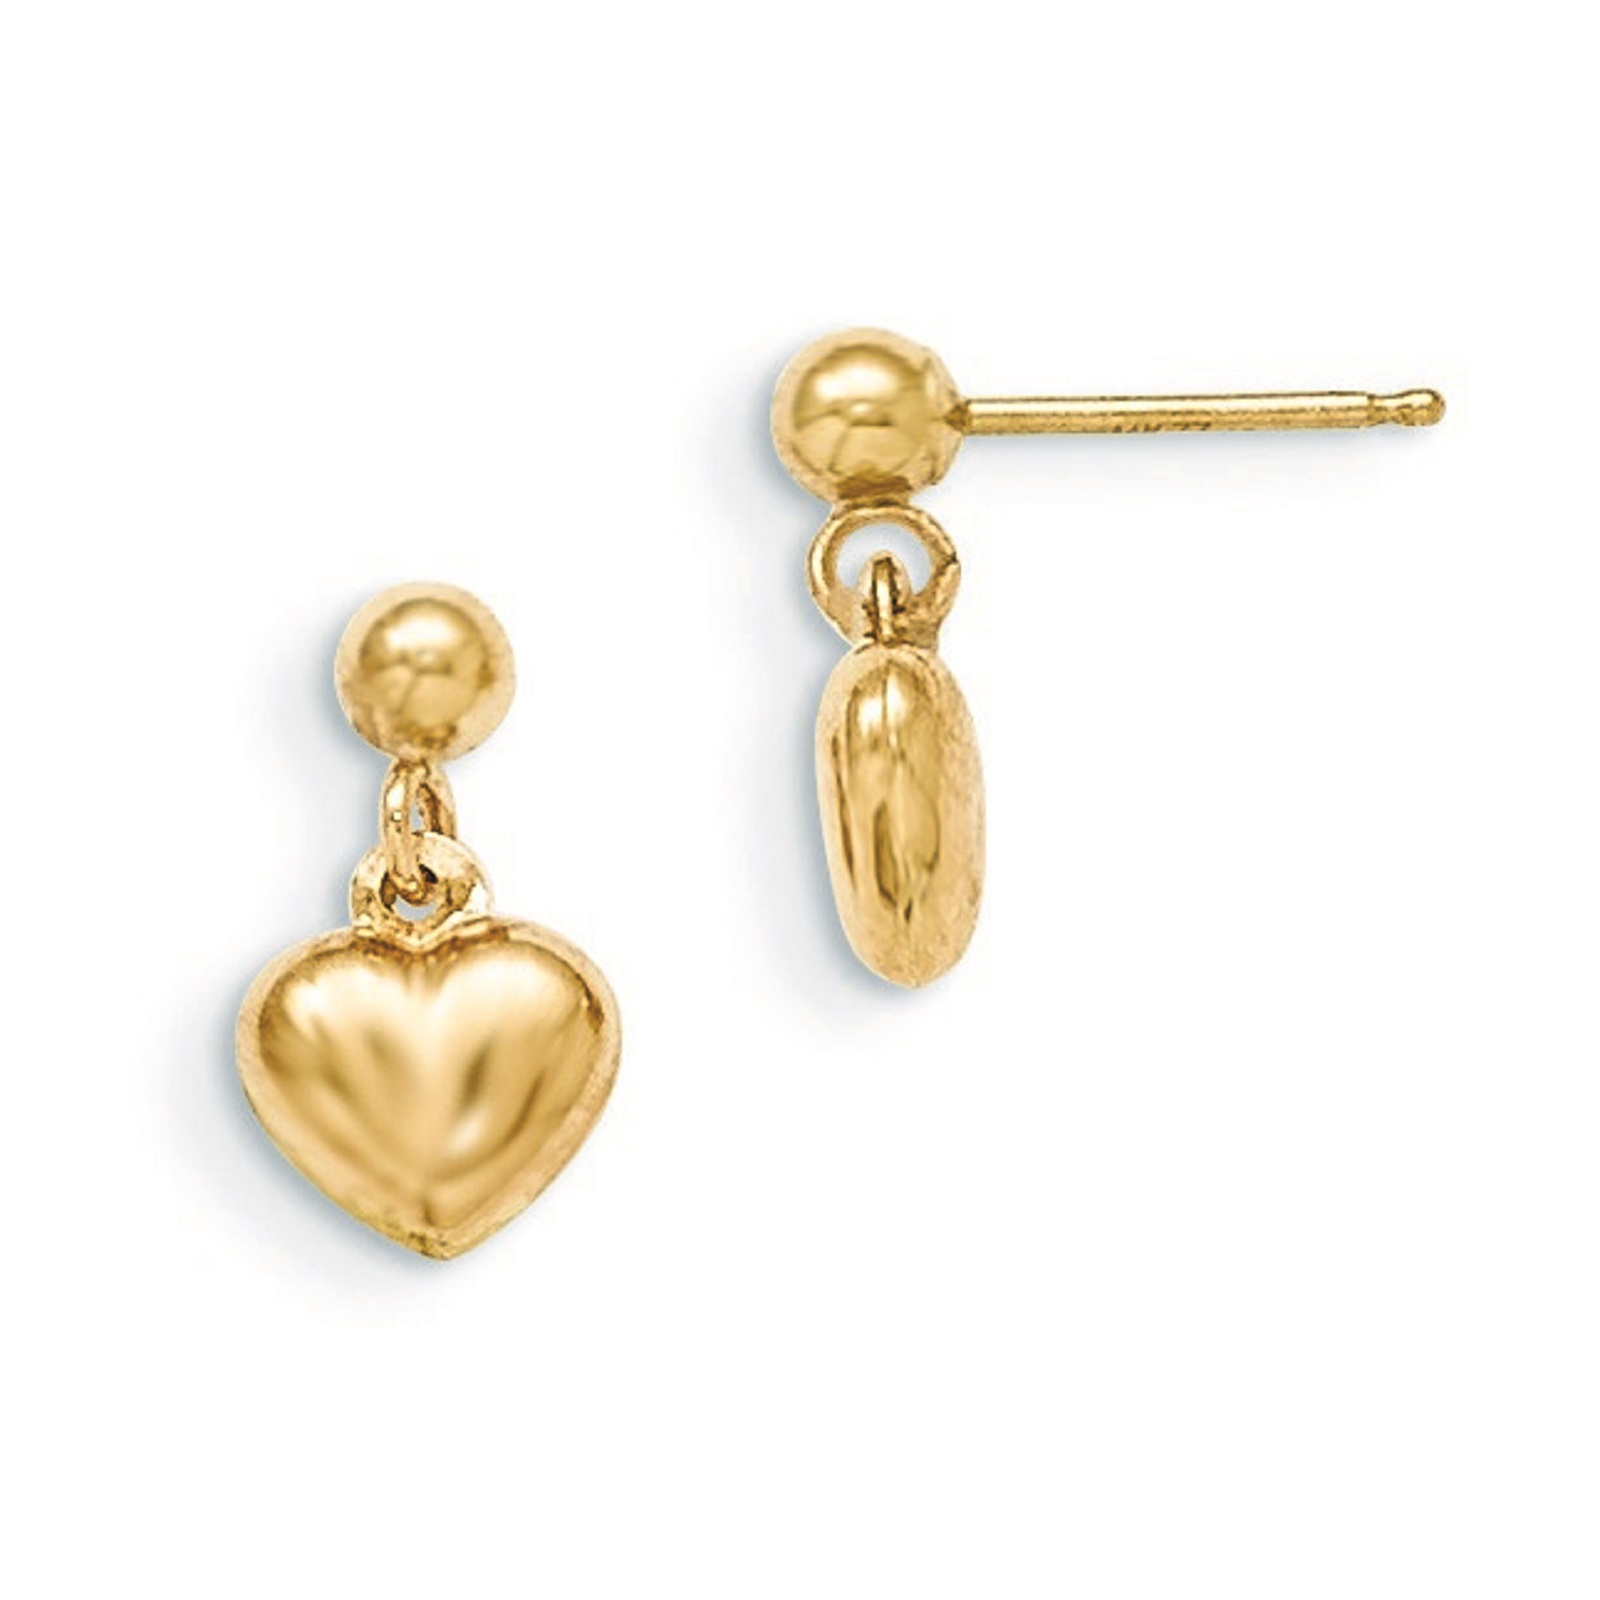 14k Yellow Gold Puffed Heart Dangle Earrings - Measures 11x6mm